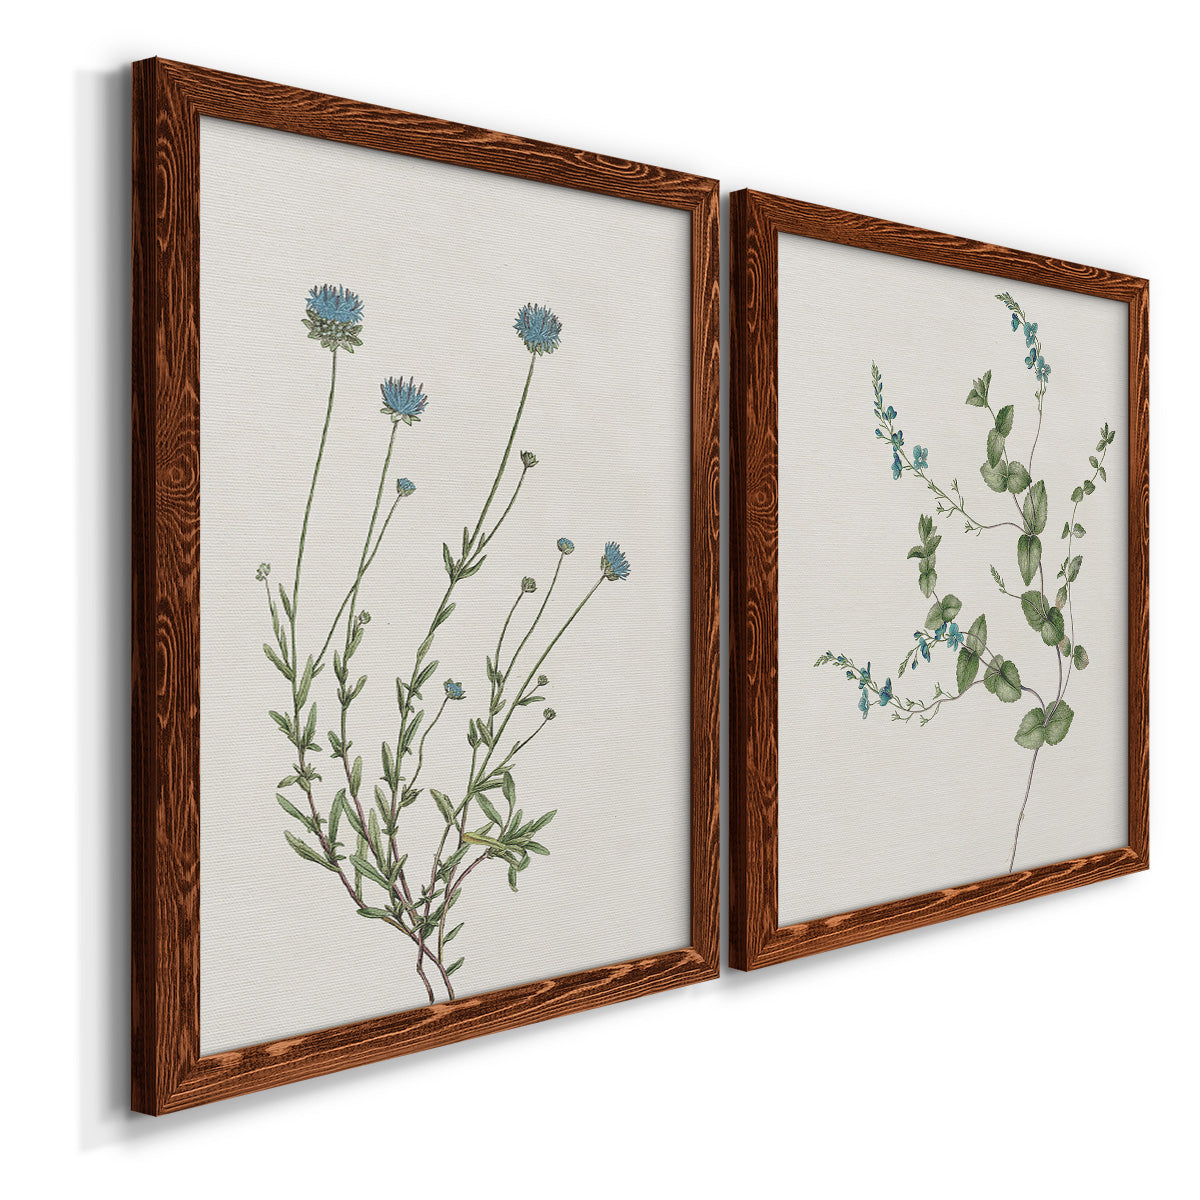 Blue Wispy I - Premium Framed Canvas 2 Piece Set - Ready to Hang